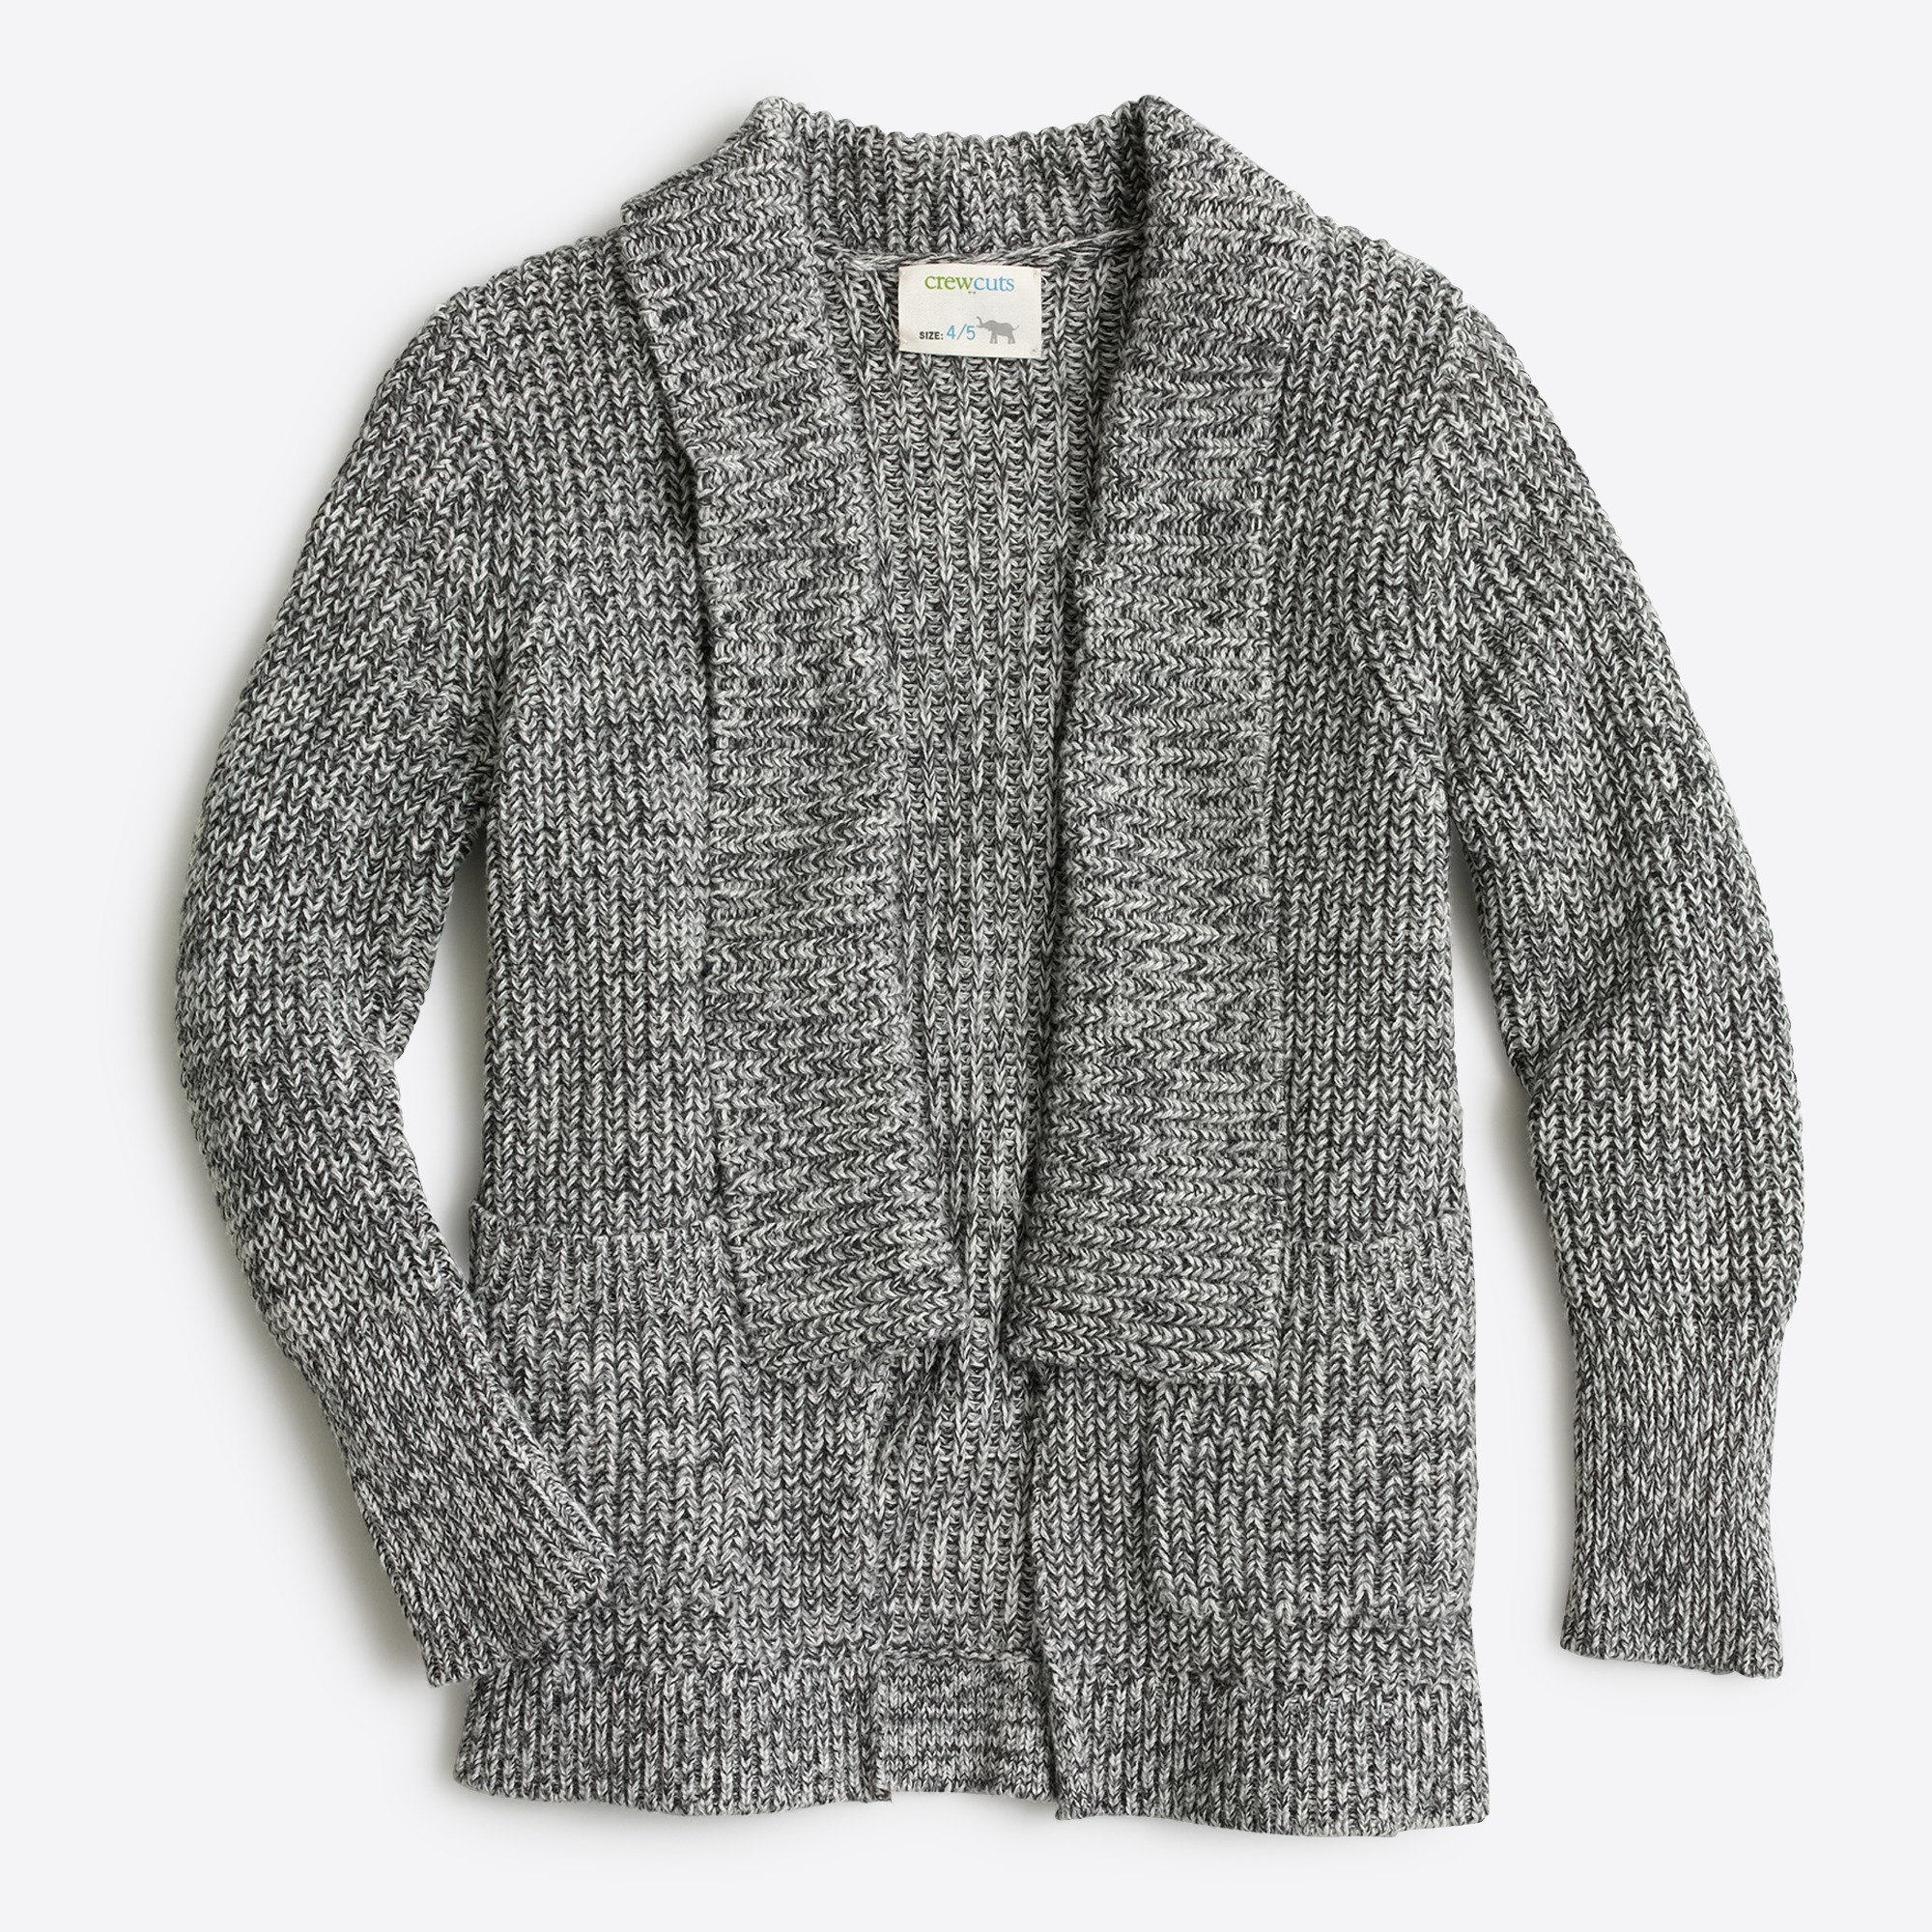 Girls' marled rib-stitch open cardigan sweater : FactoryGirls